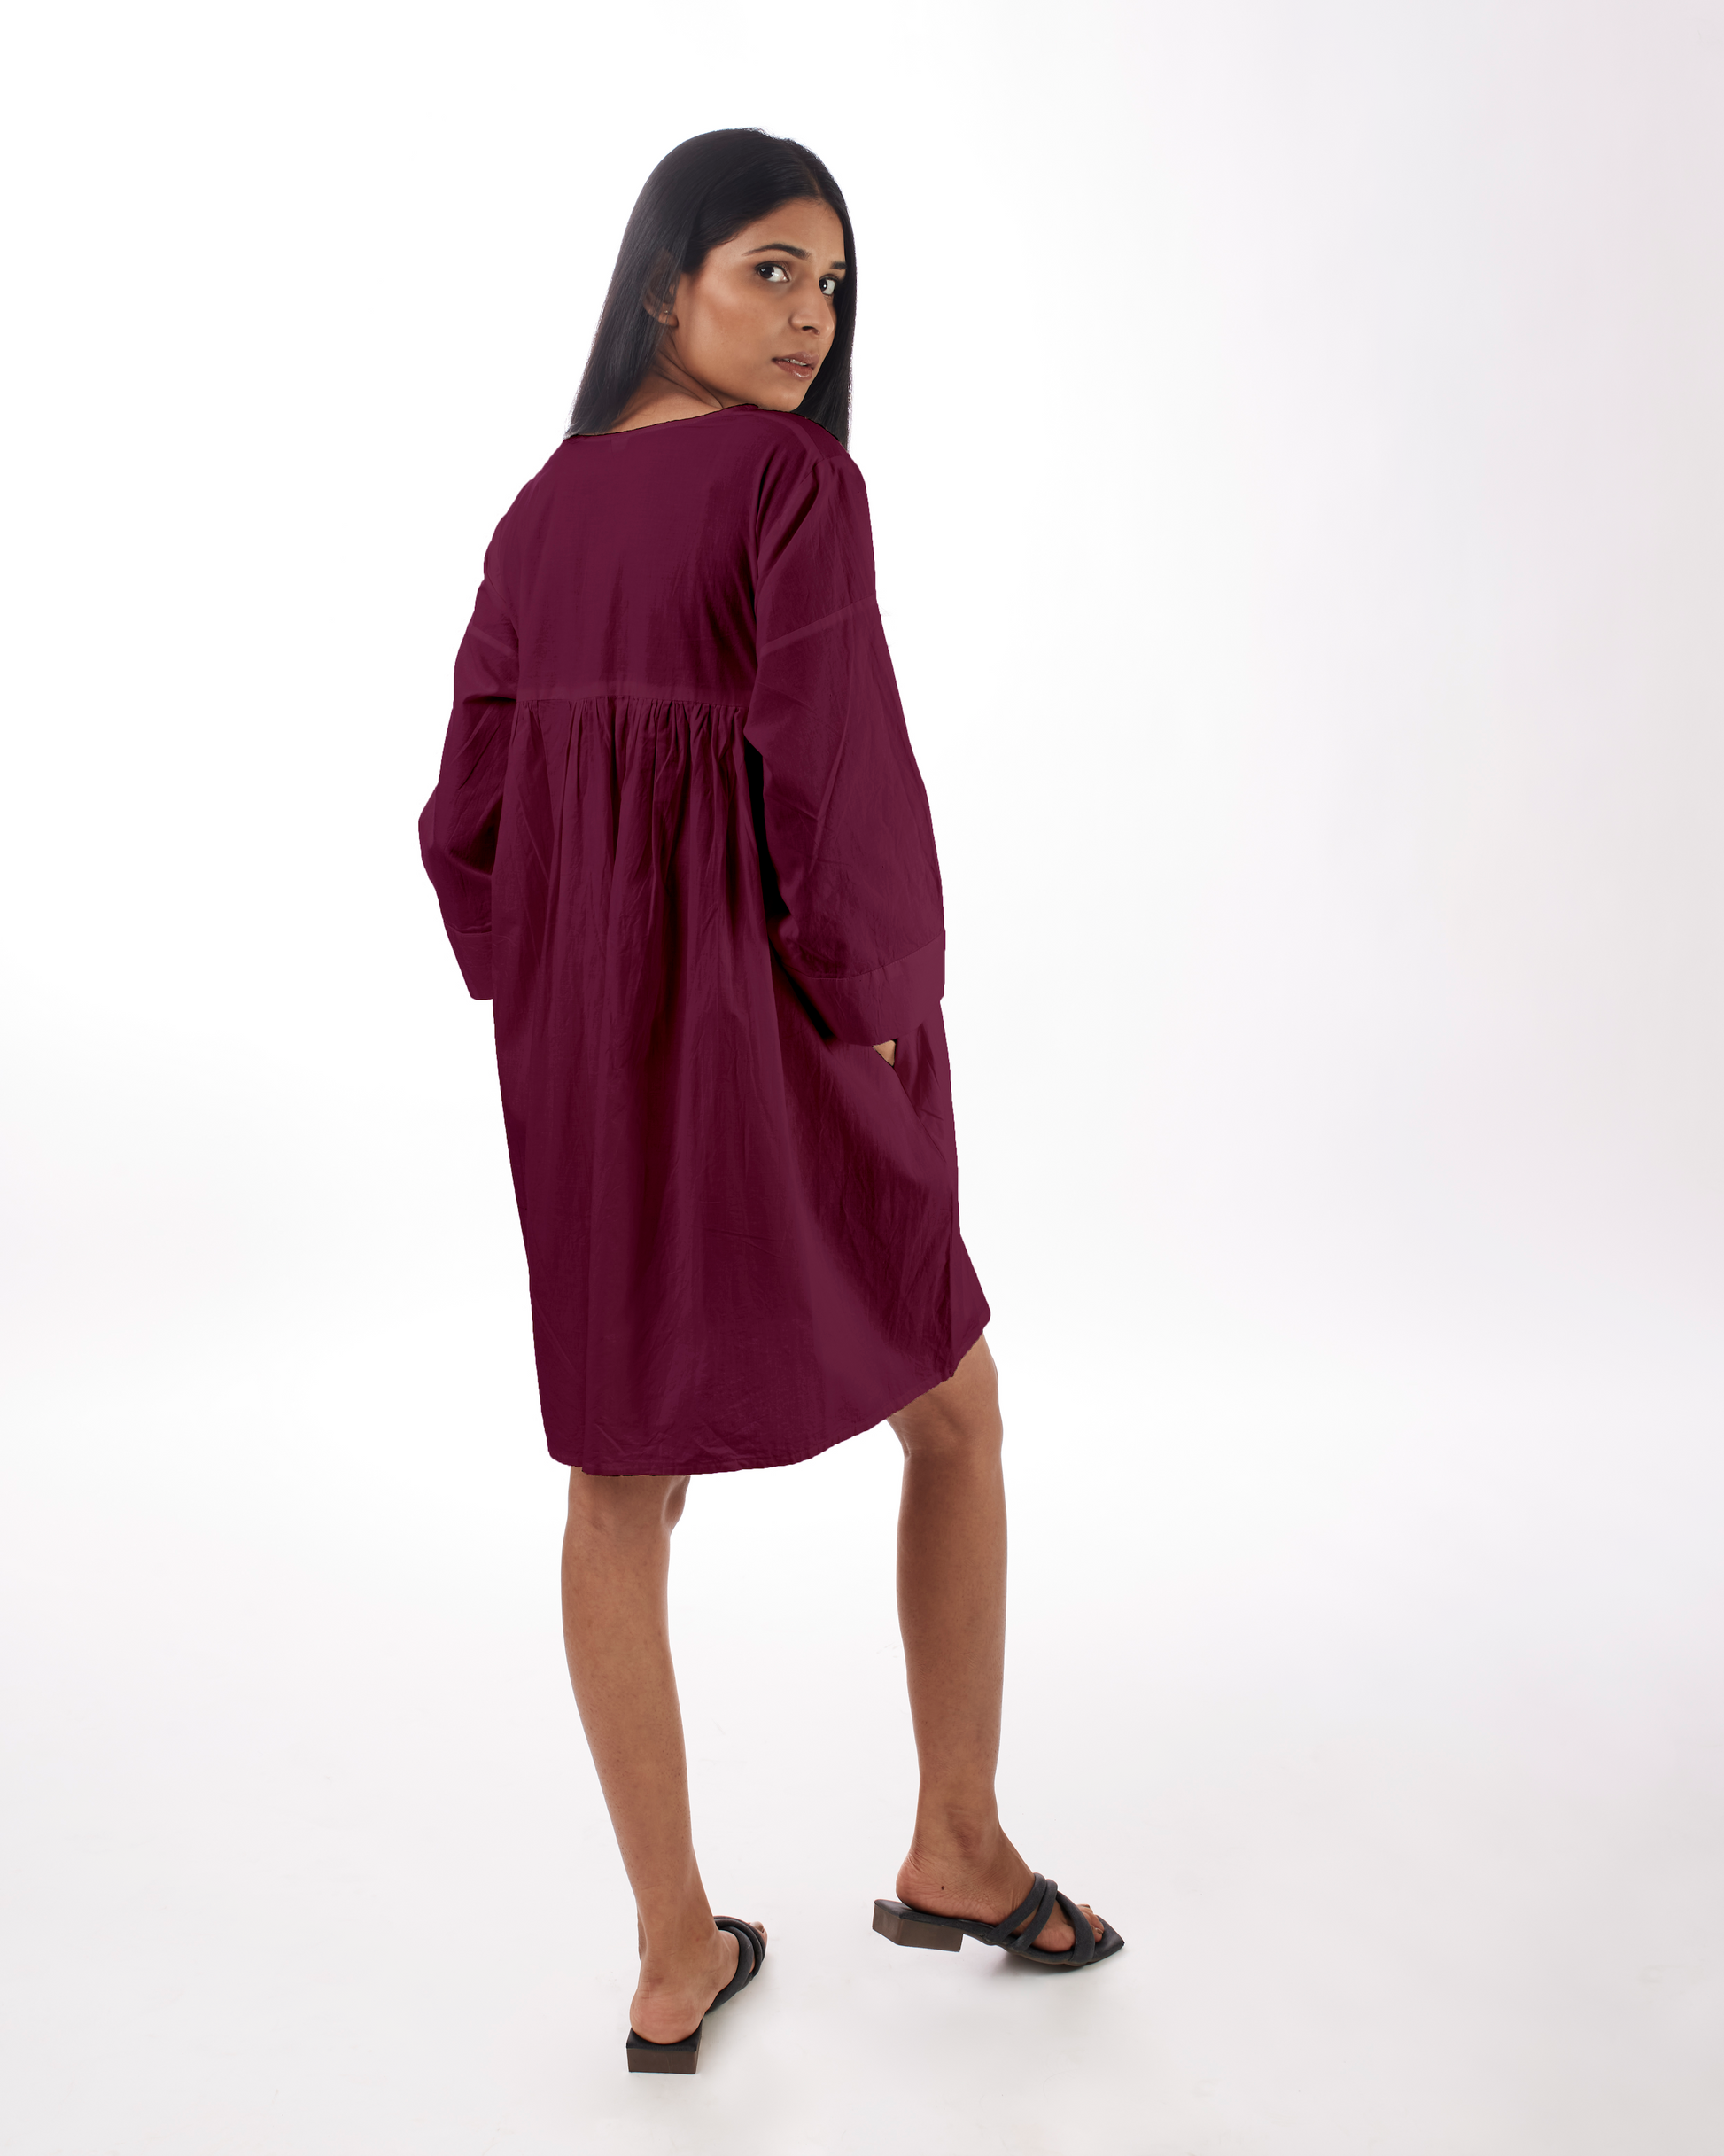 Plum Yoke Mini Dress at Kamakhyaa by Kamakhyaa. This item is 100% pure cotton, Casual Wear, FB ADS JUNE, For Her, KKYSS, Mini Dresses, Natural, Regular Fit, Solids, Summer Sutra, Womenswear